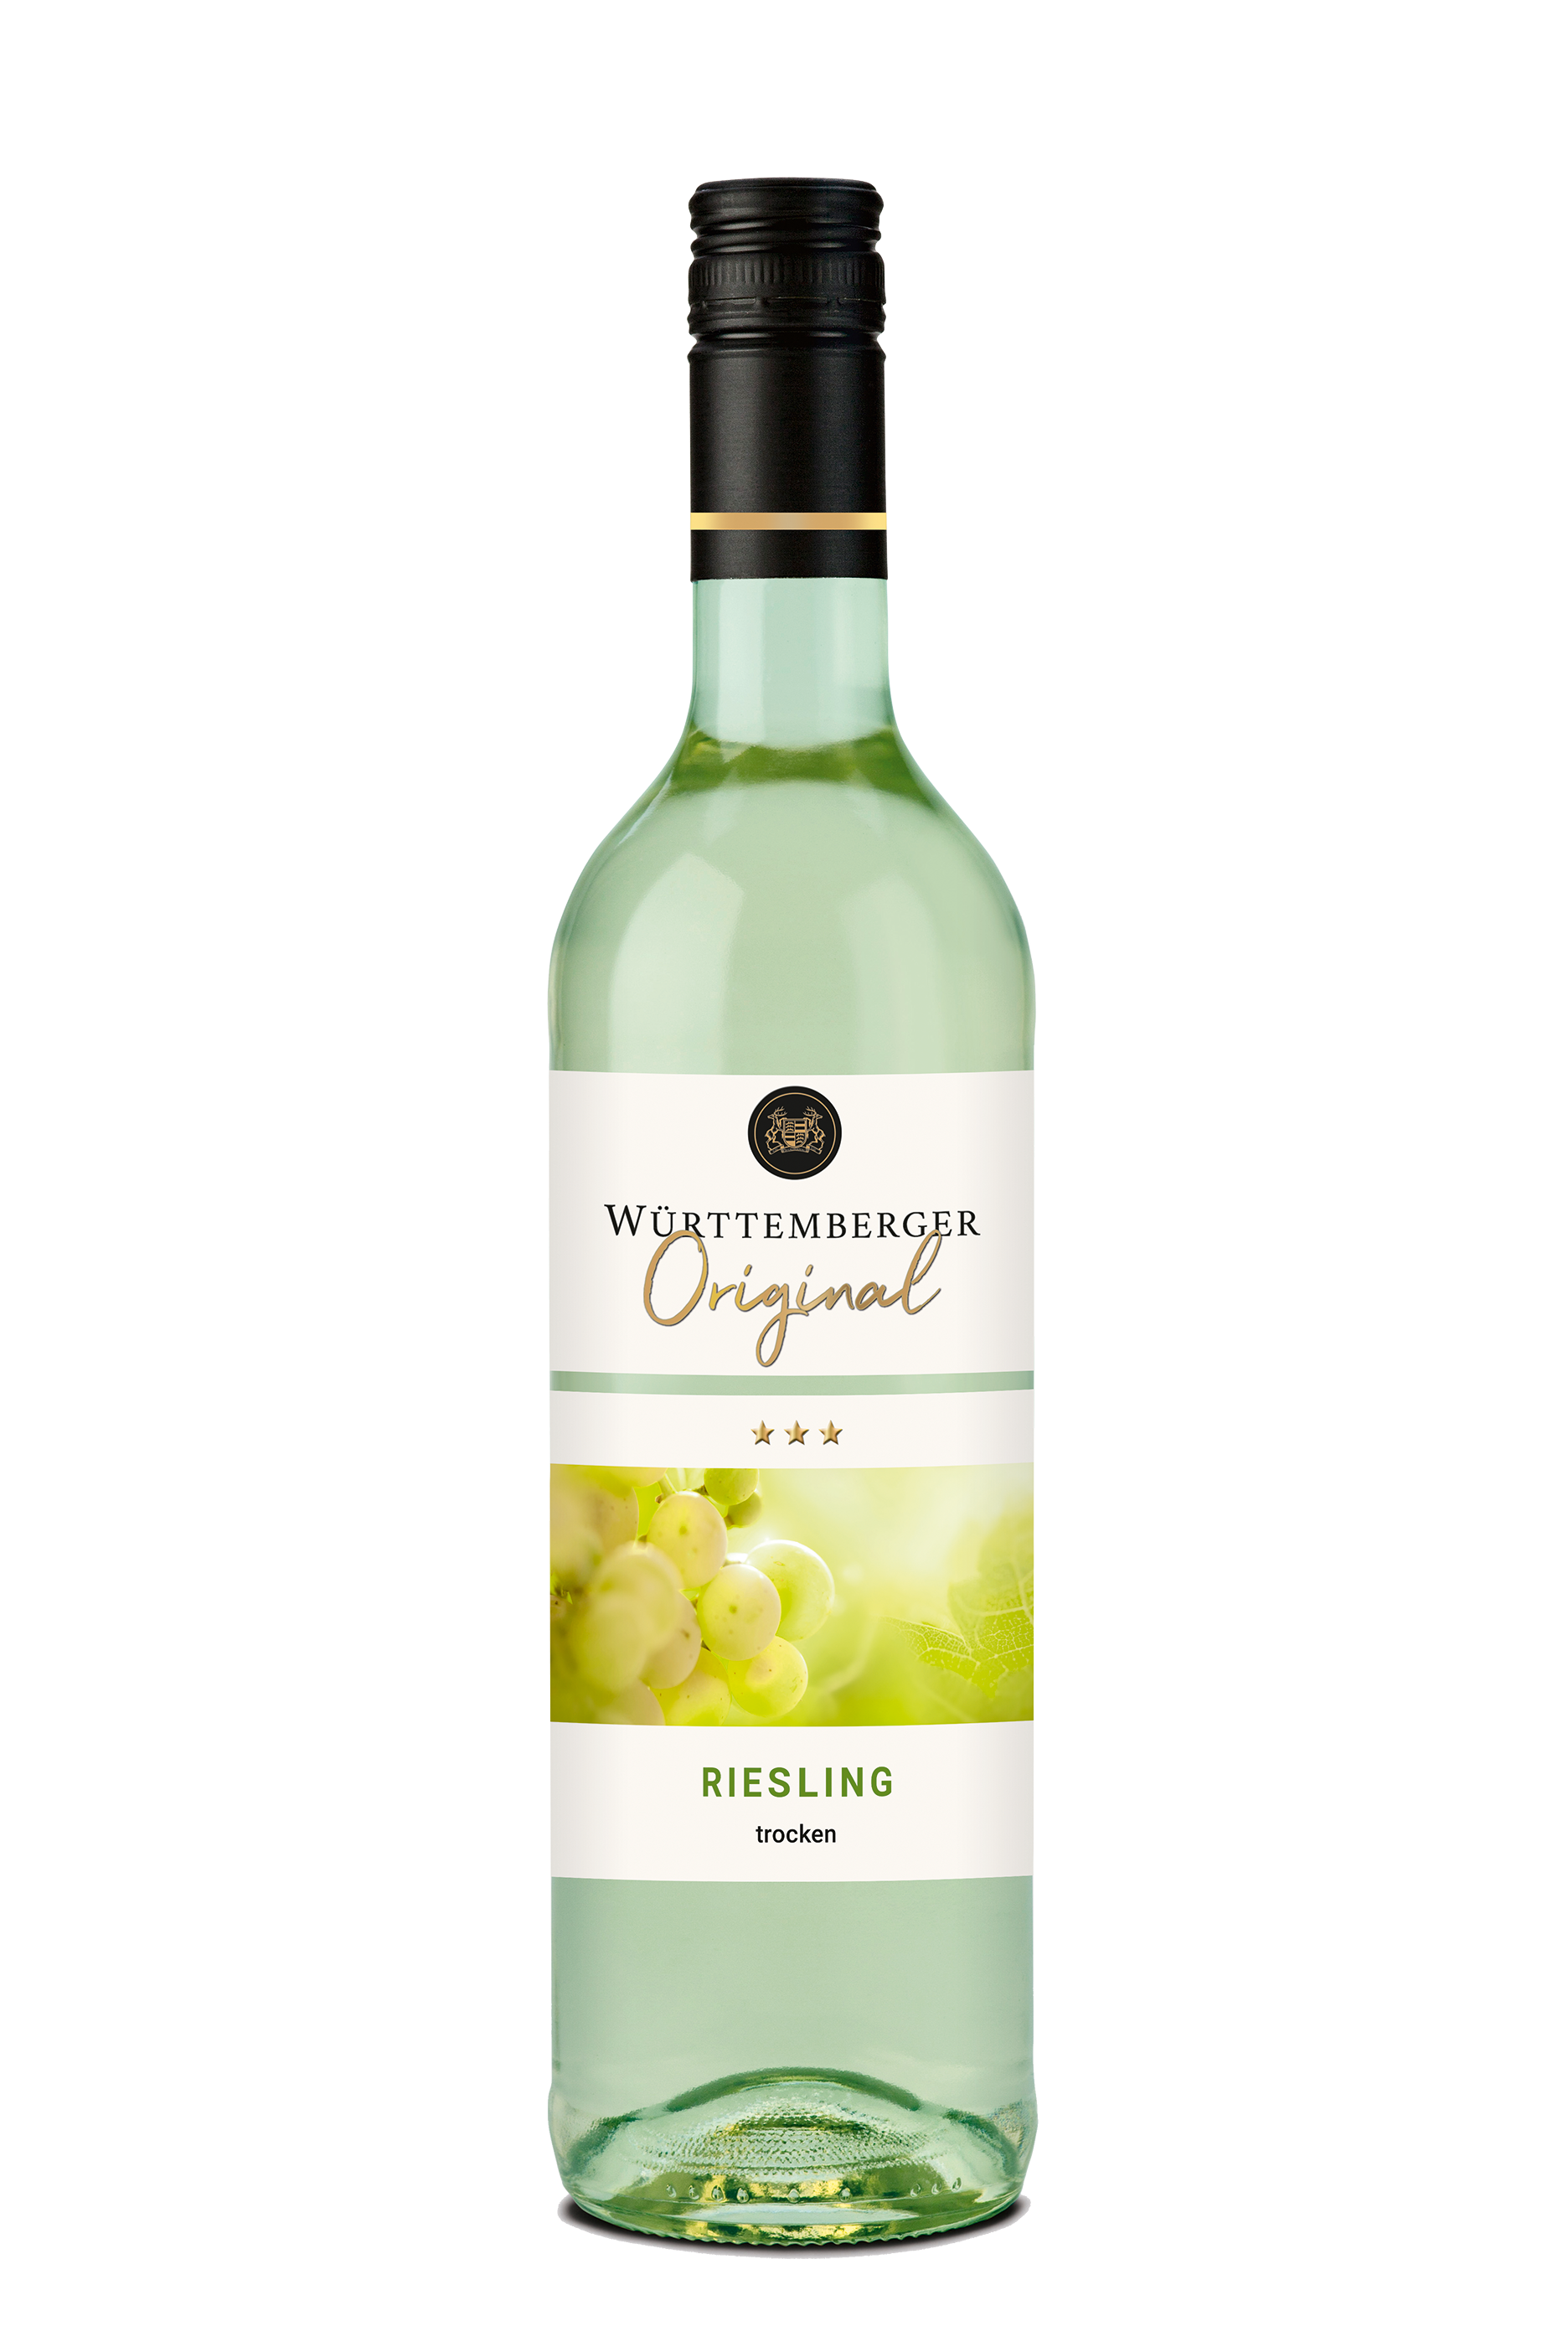 WZG Württemberger Original Riesling trocken 0,75 L - Weisswein, Württemberger Wein, Qualitätswein